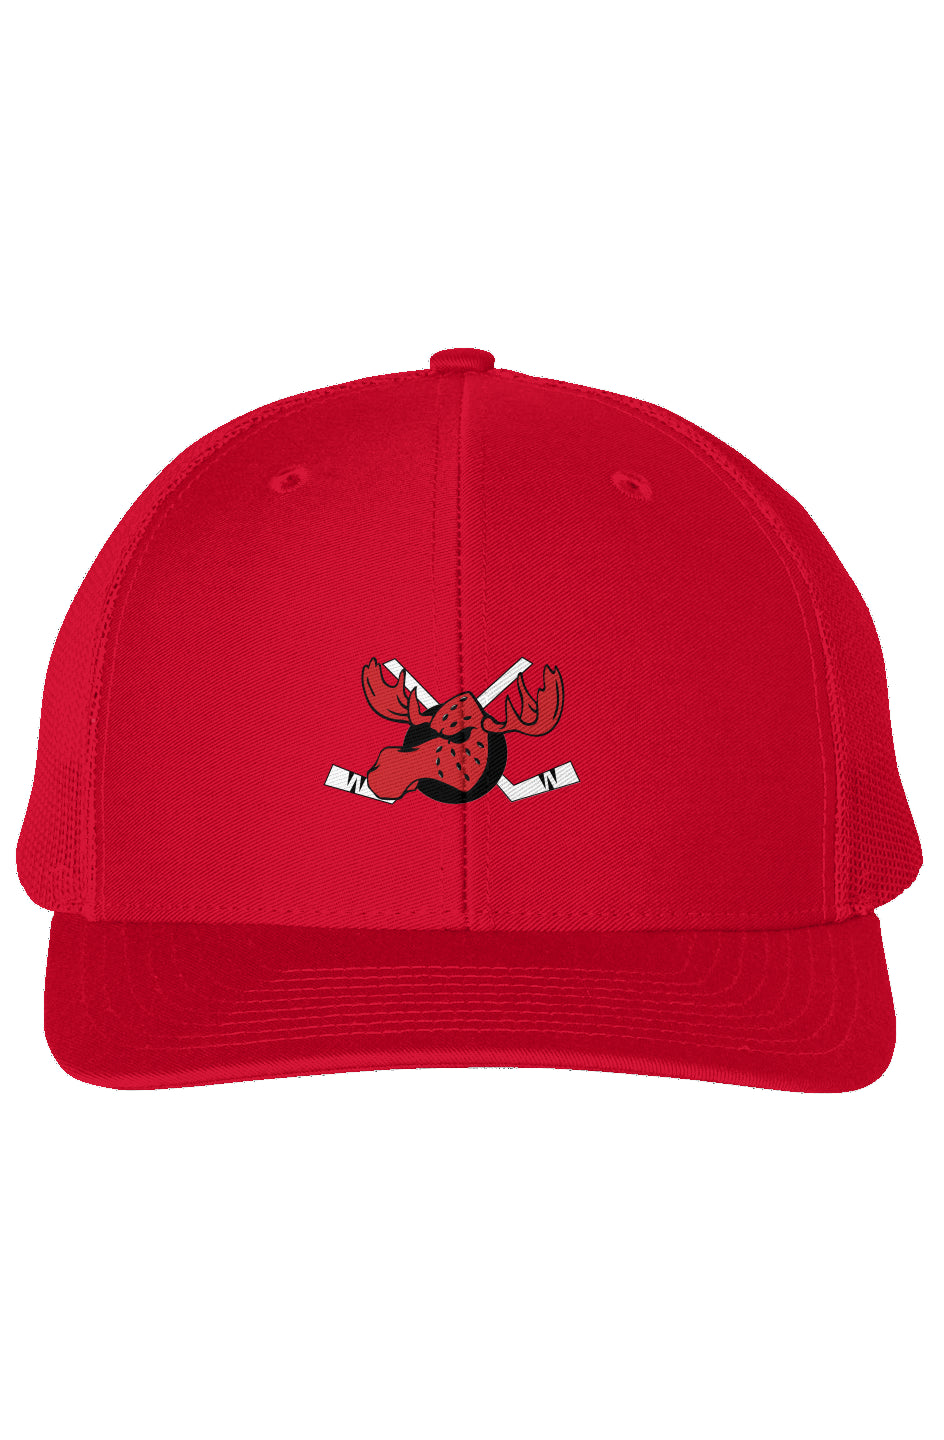 JH Moose Hockey Snapback Trucker Cap (Red)